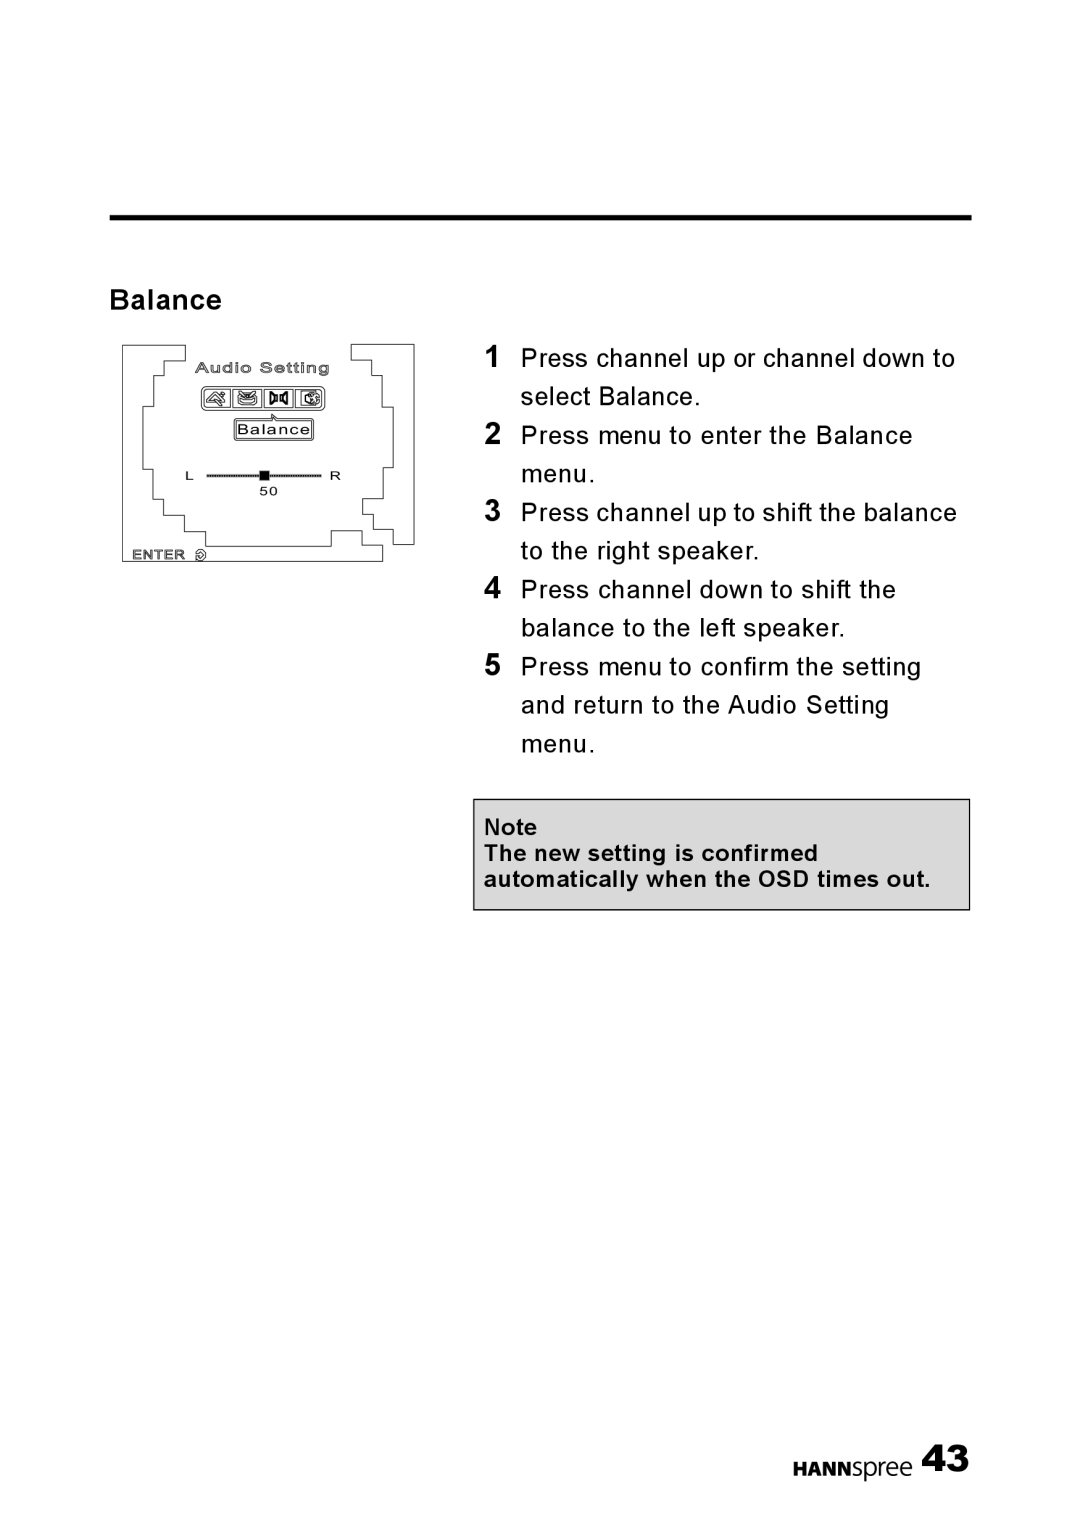 HANNspree HANNSz.crab user manual Audio Setting Balance, L R Enter 